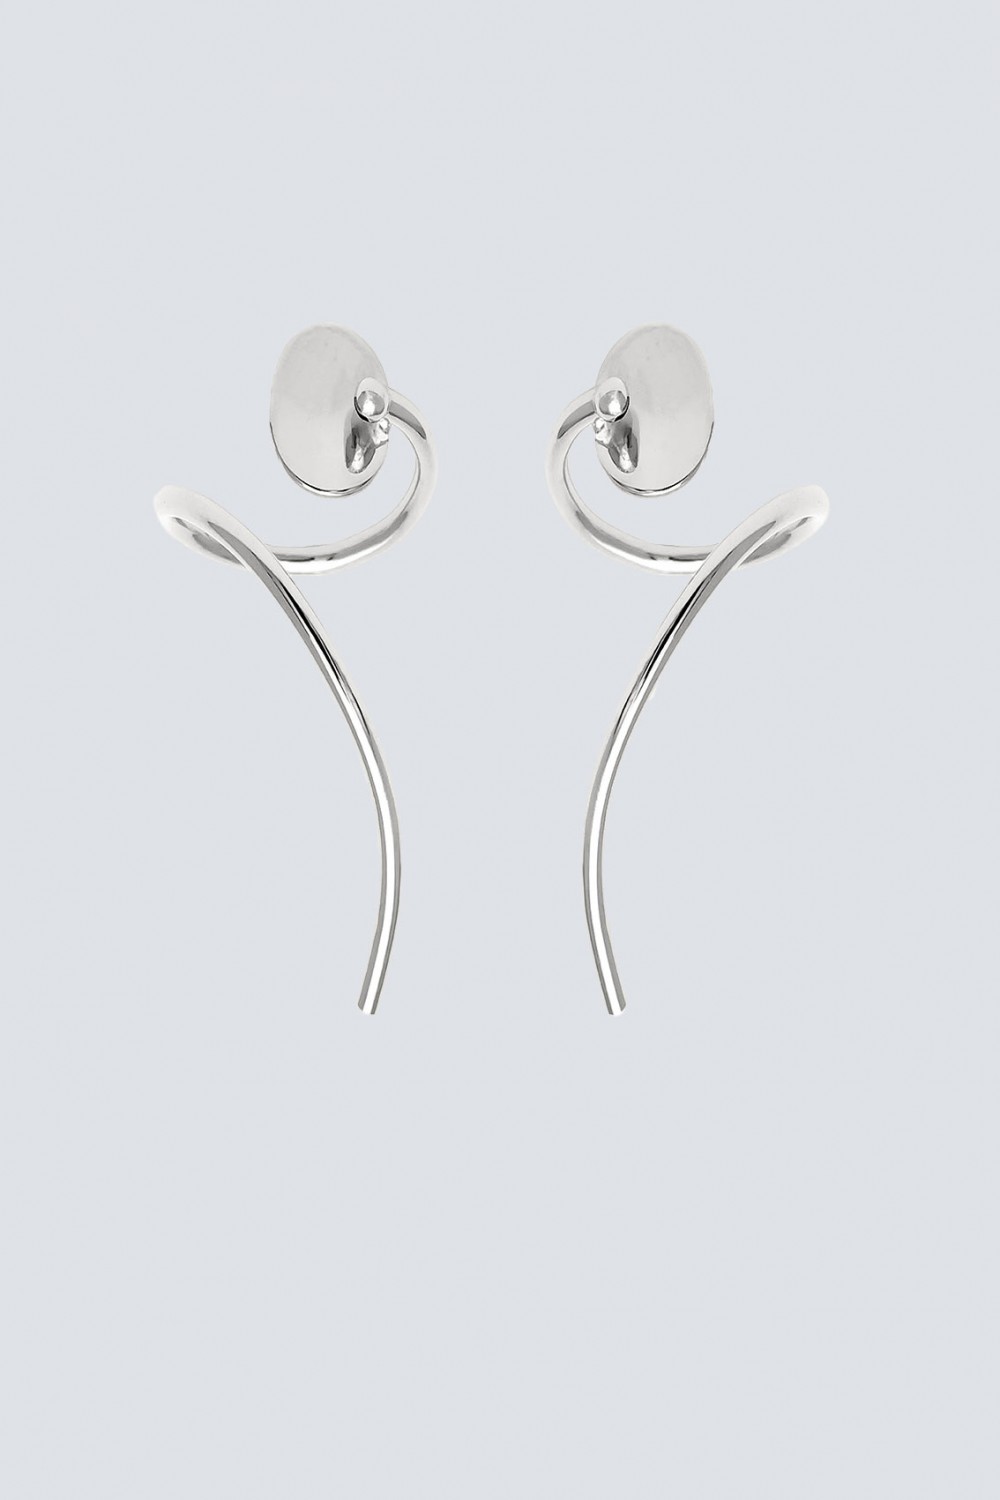 Small silver geometric earrings